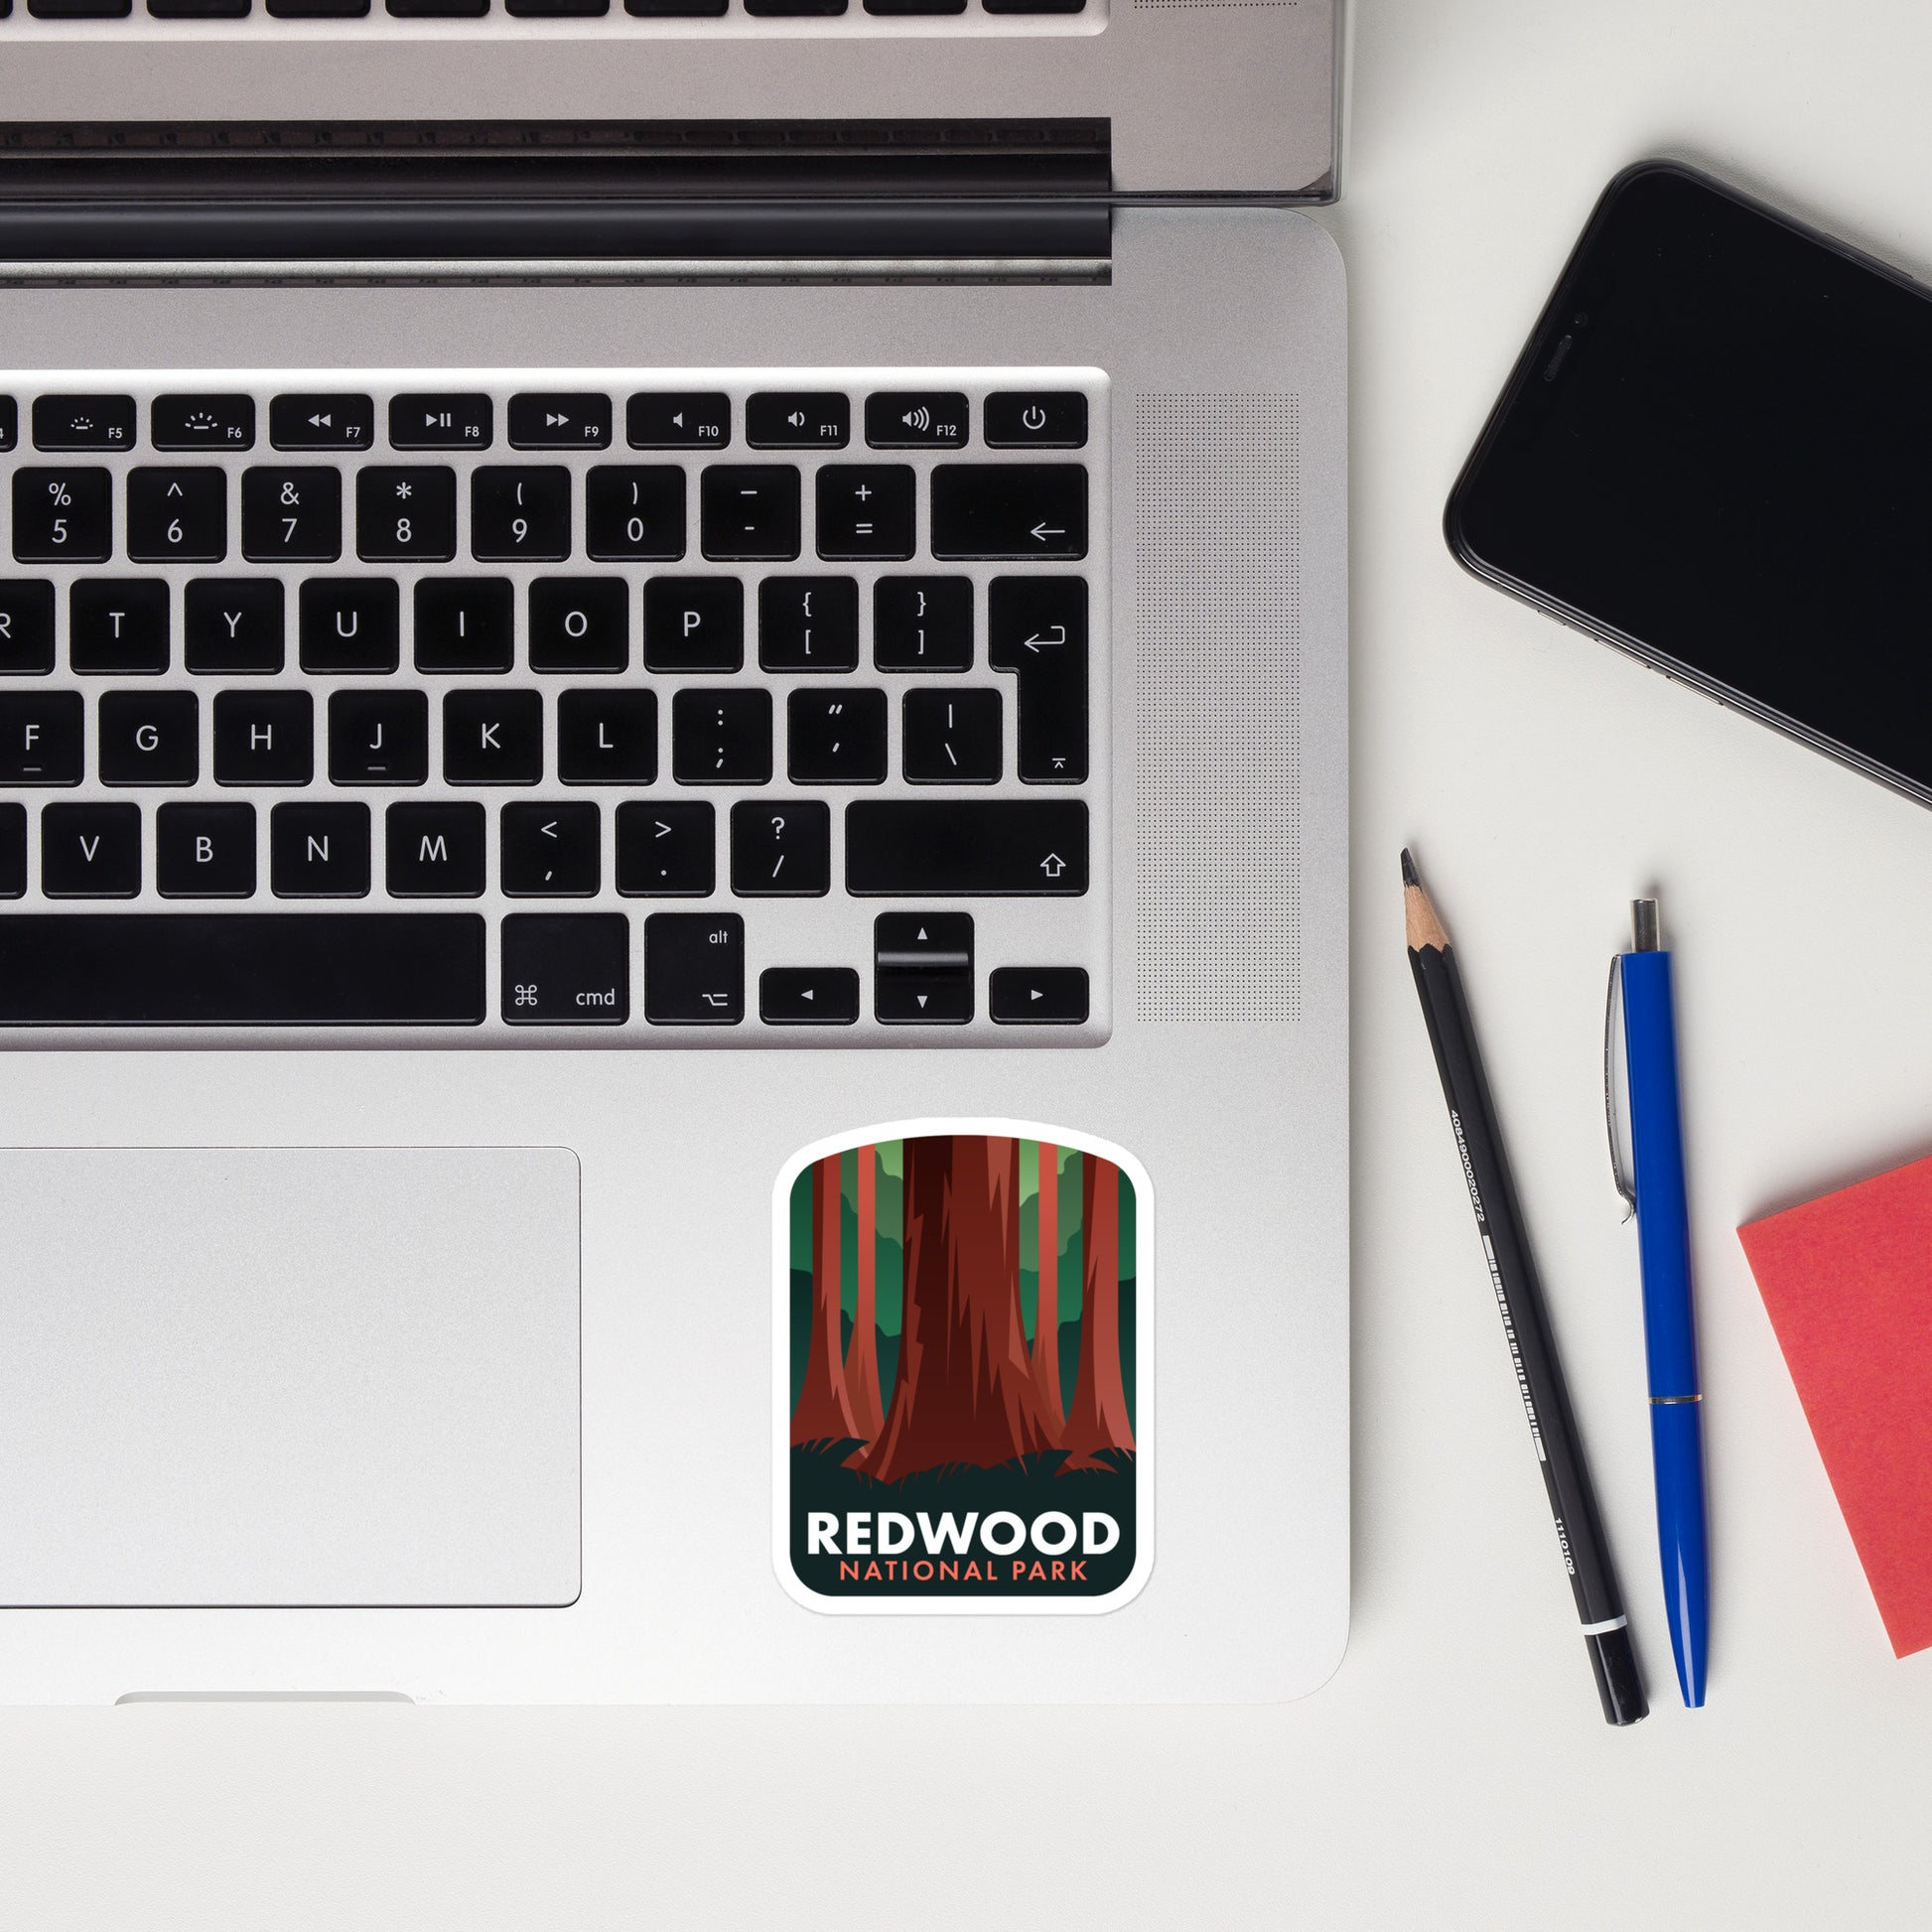 A sticker of Redwood National Park on a laptop